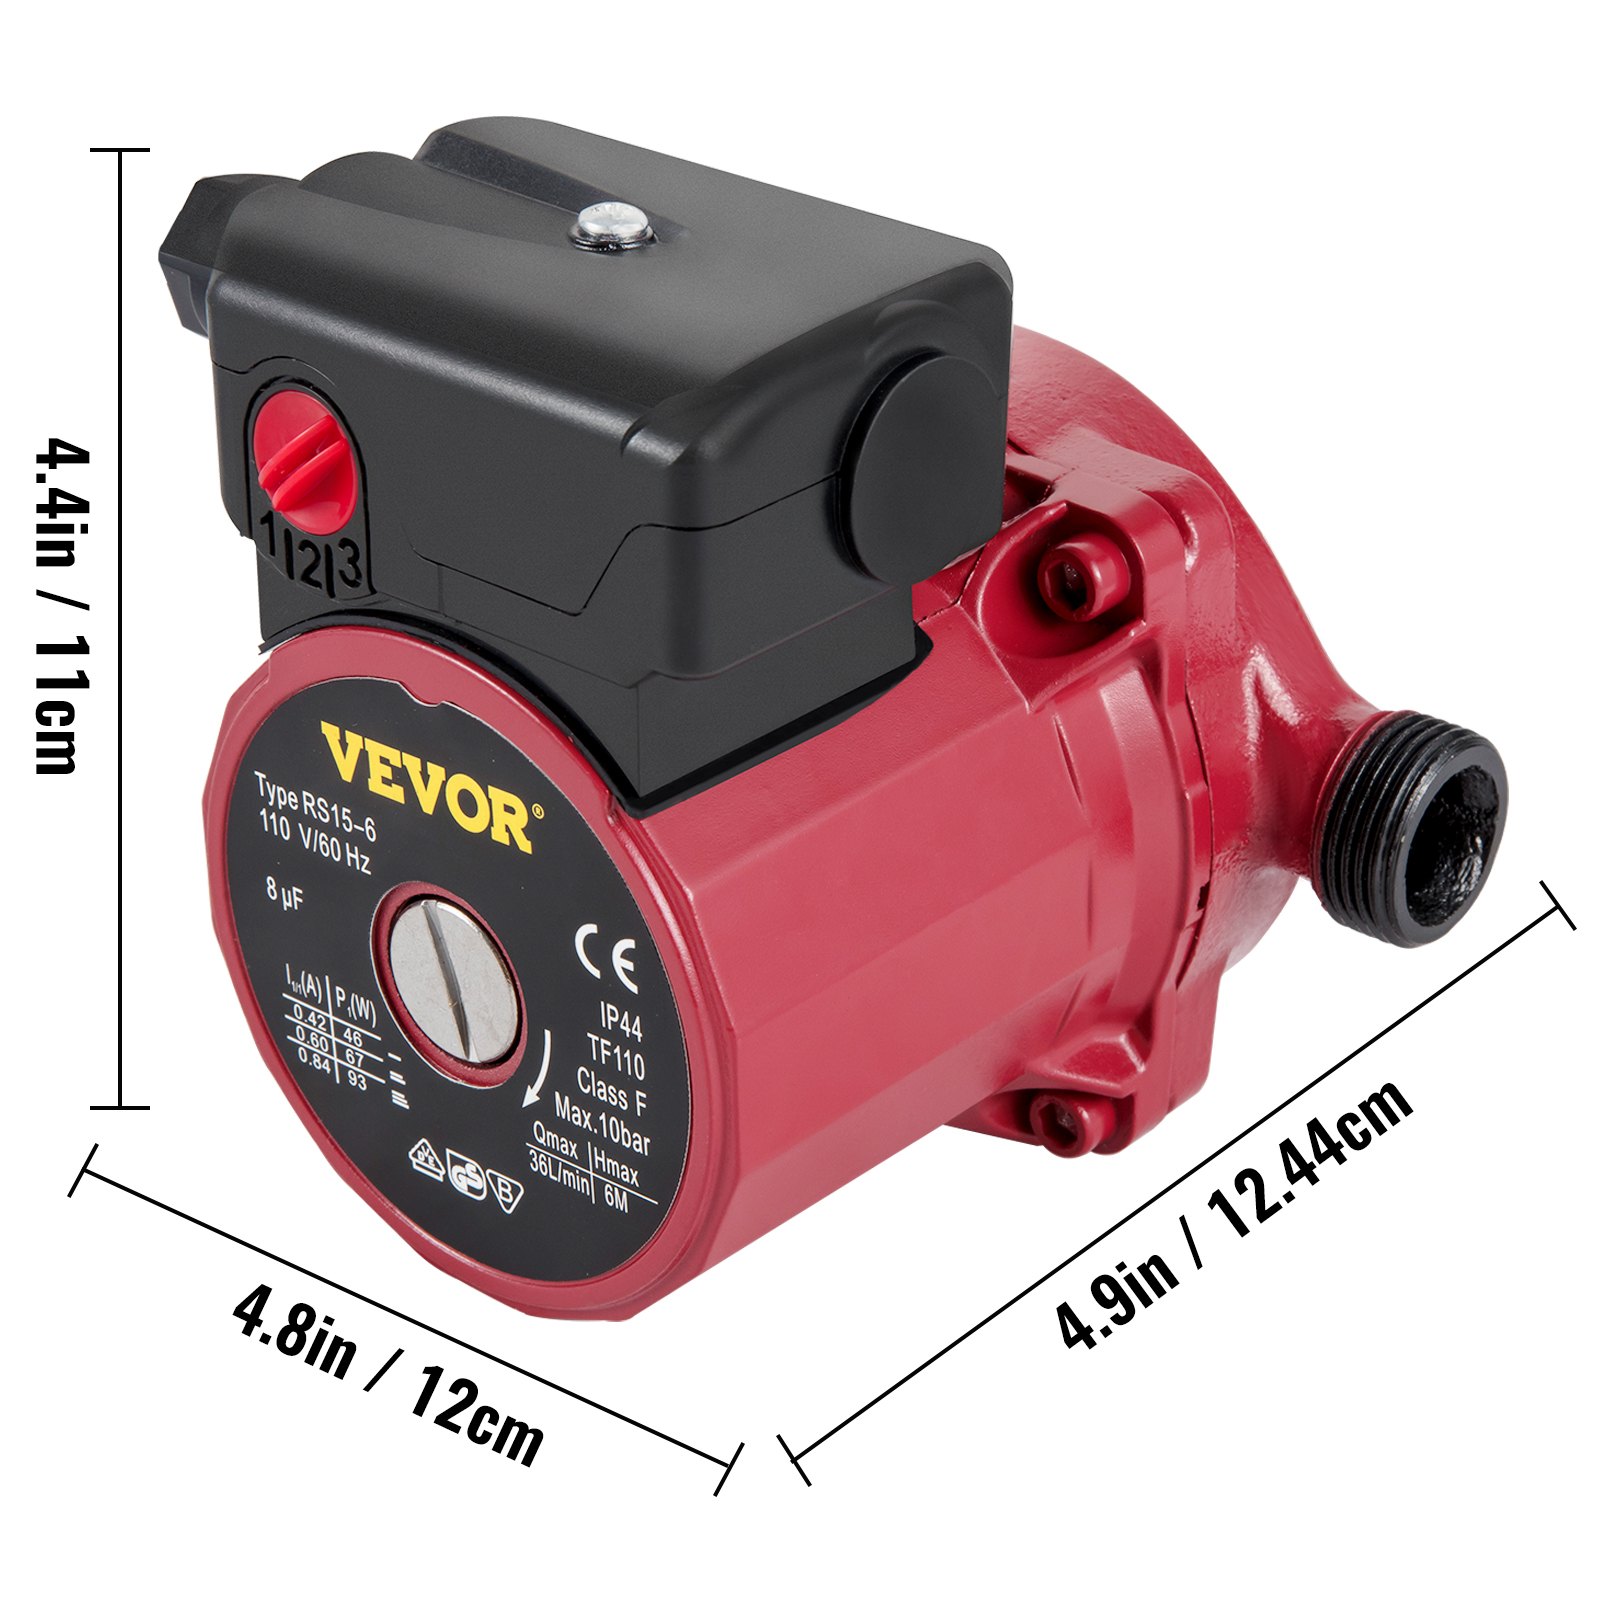 Vevor Recirculating Pump 93w 110v Water Circulator Circulating Pump